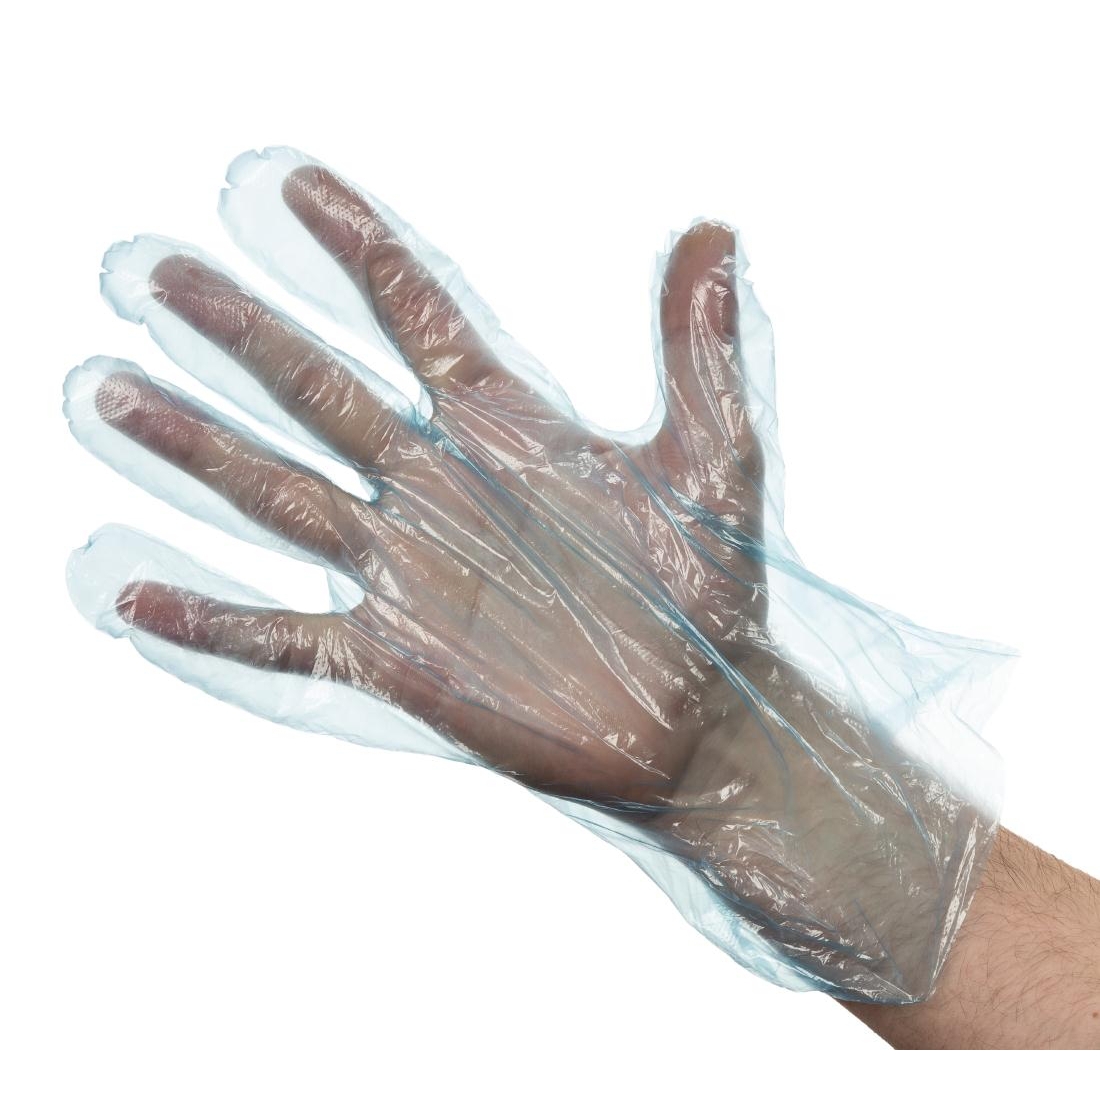 Disposable Gloves Blue